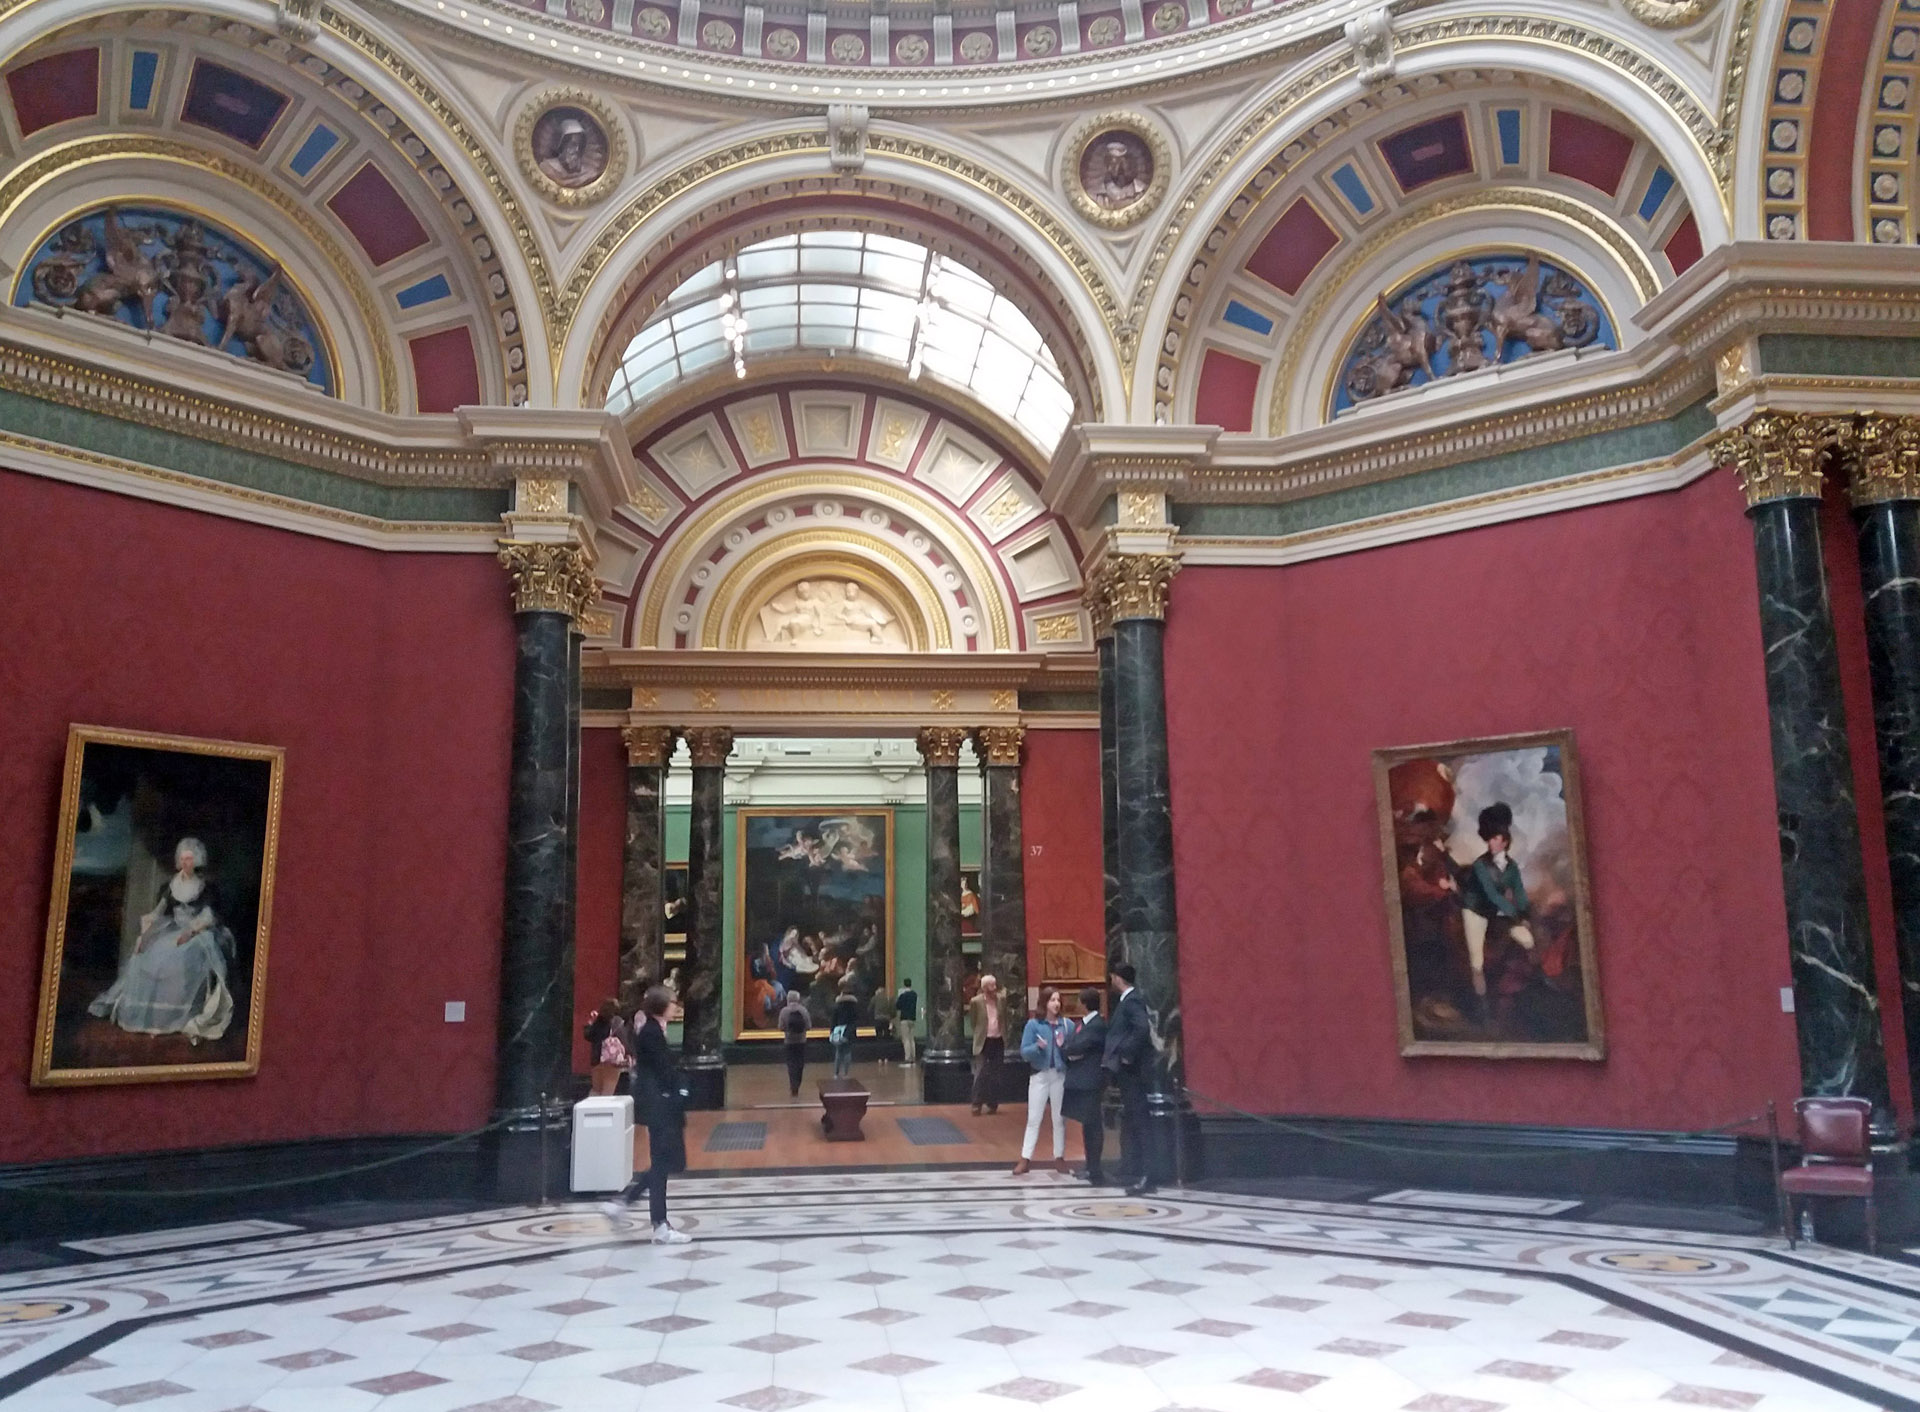 National Gallery spaces between rooms